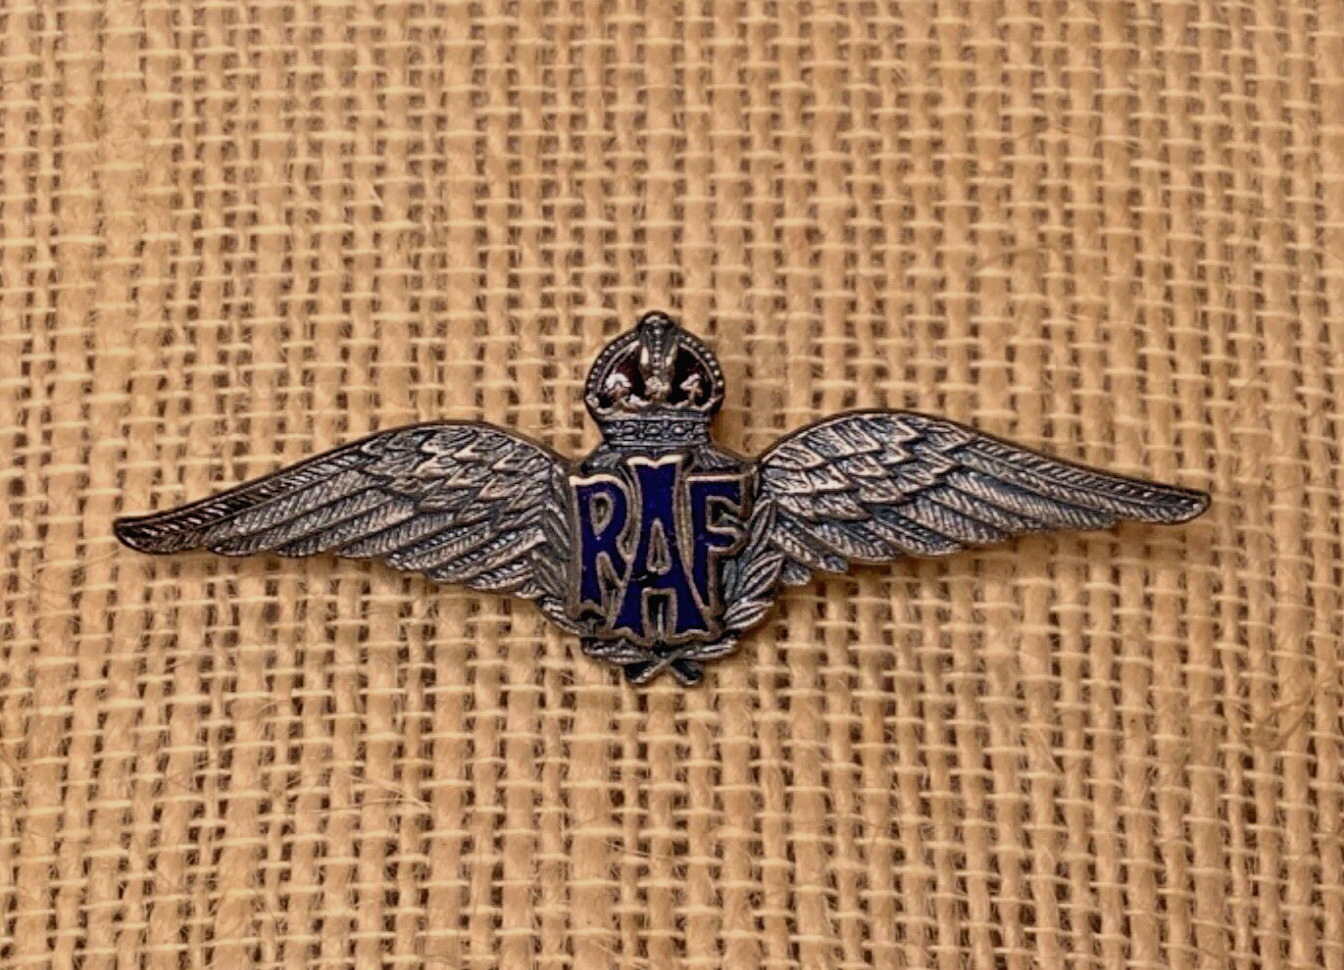 WWII British RAF Silver & Enamel Sweetheart Wing Pin Brooch Royal Air Force